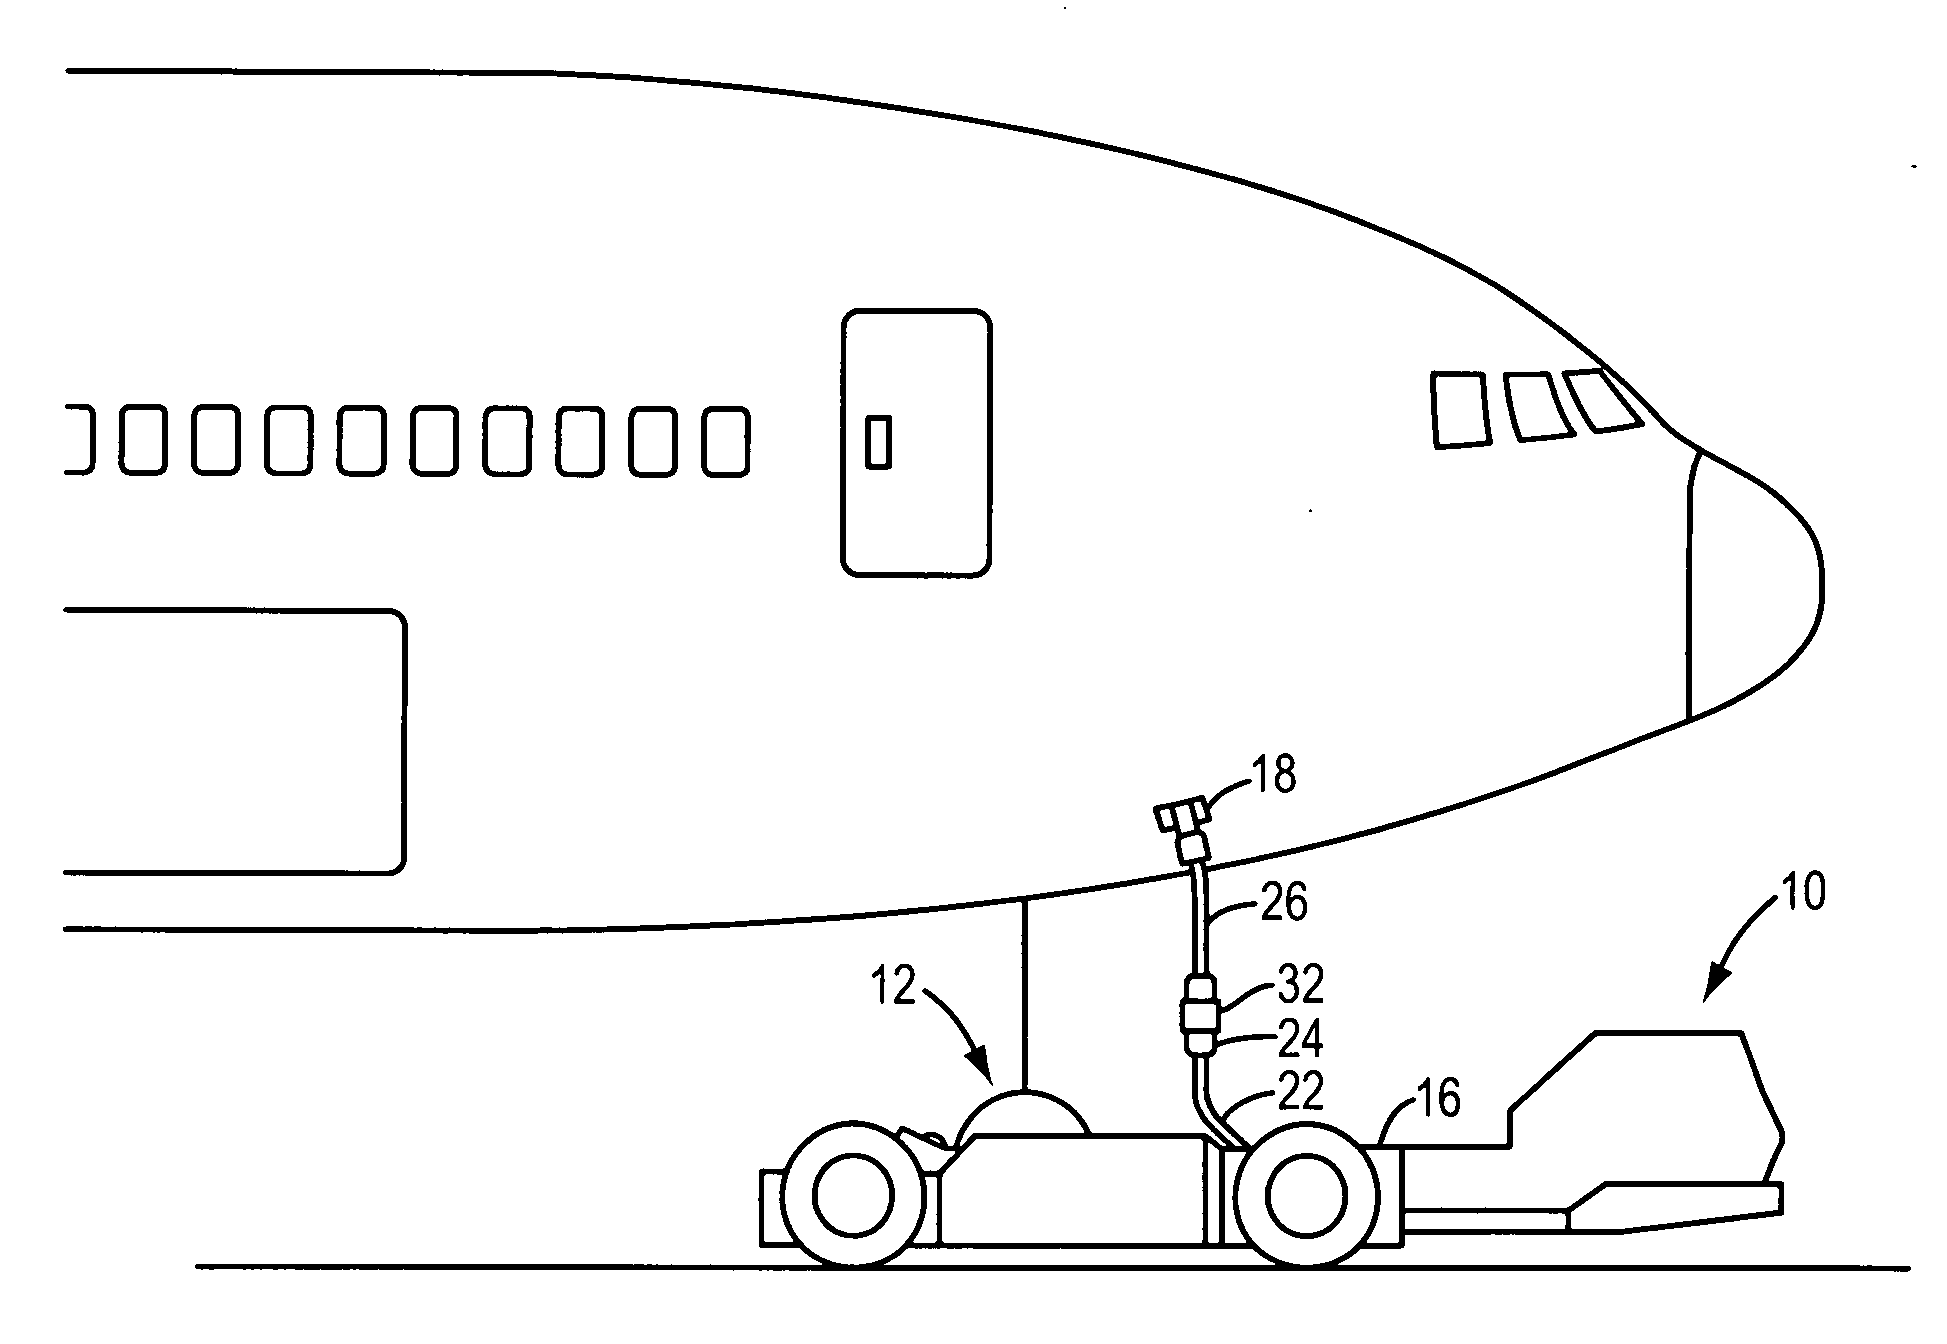 Aircraft GPU connection method and apparatus